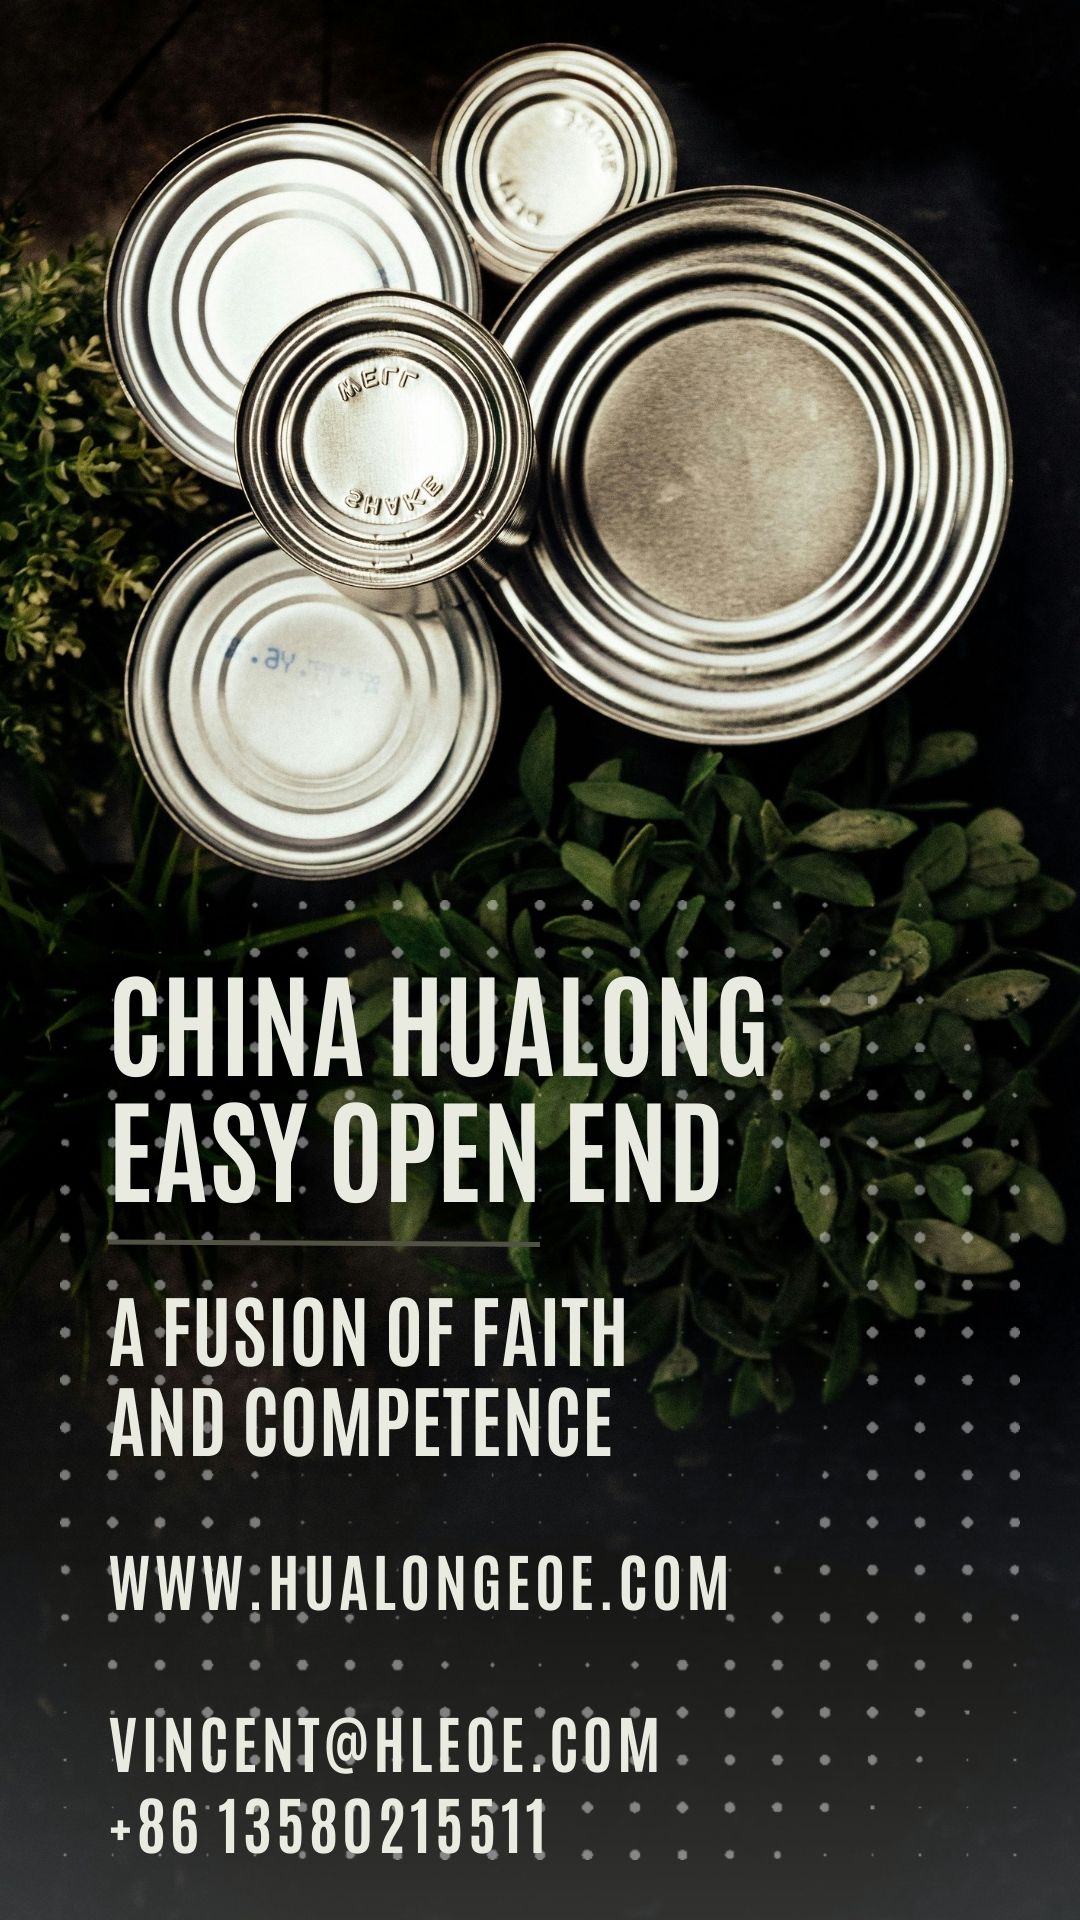 China Hualong EOE: Una fusione di fede e competenza